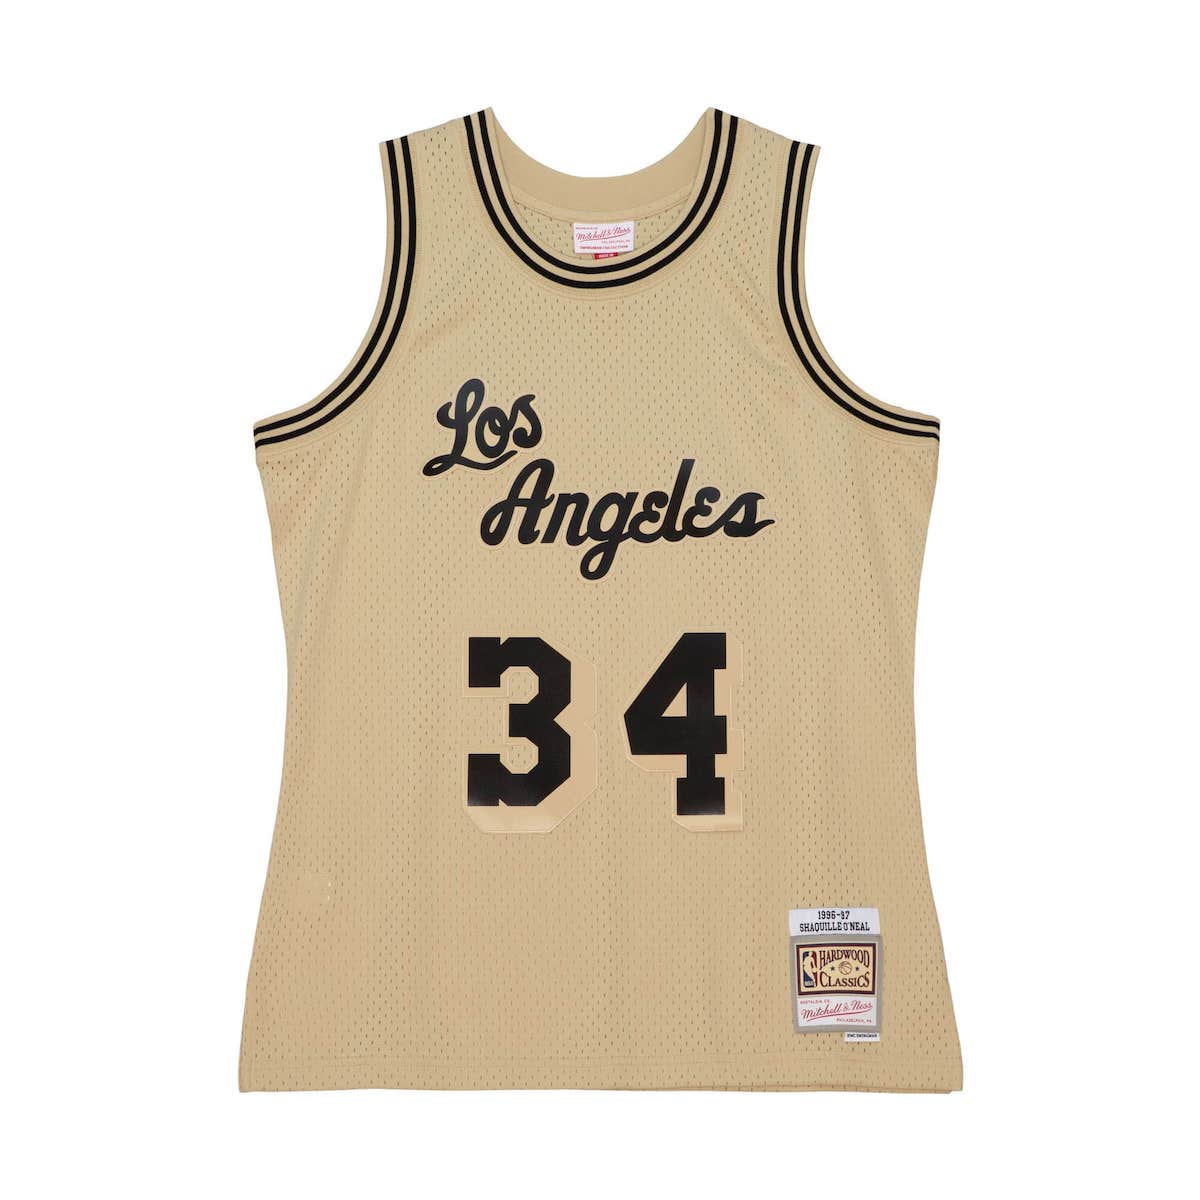 Khaki Black Swingman Shaquille O'Neal Los Angeles Lakers 1996-97